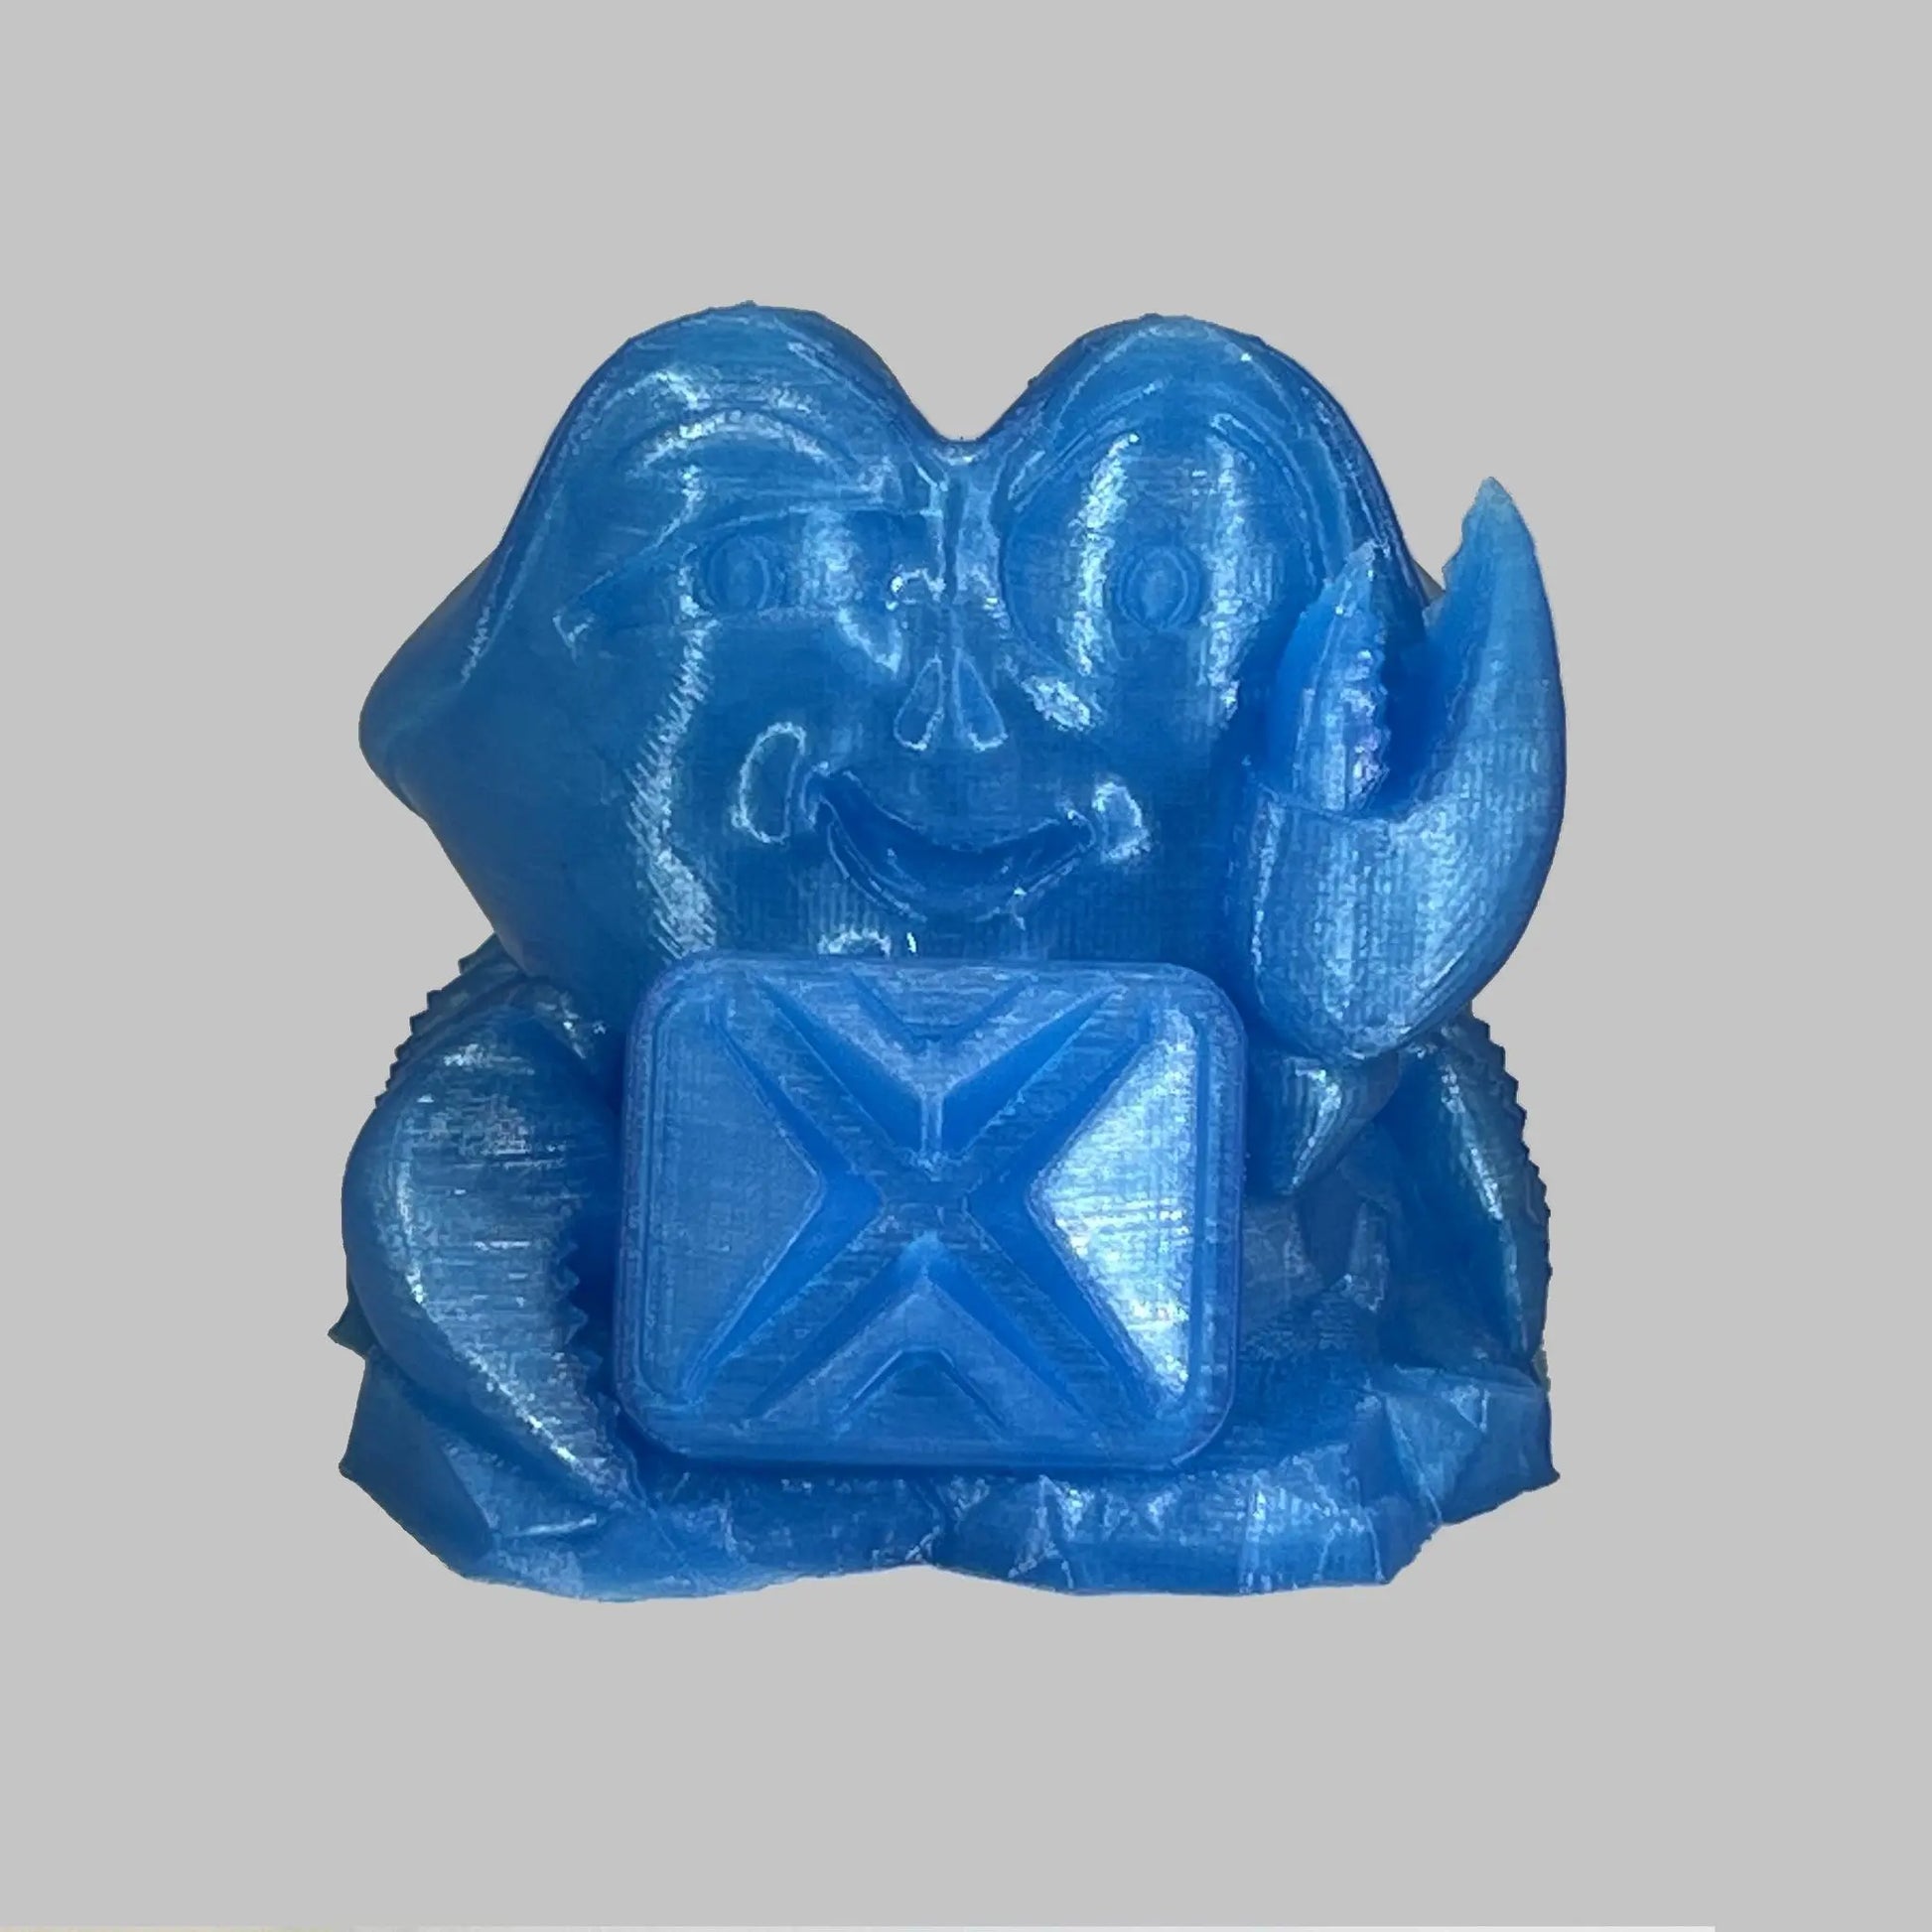 Glacier Blue PLA COEX 3D